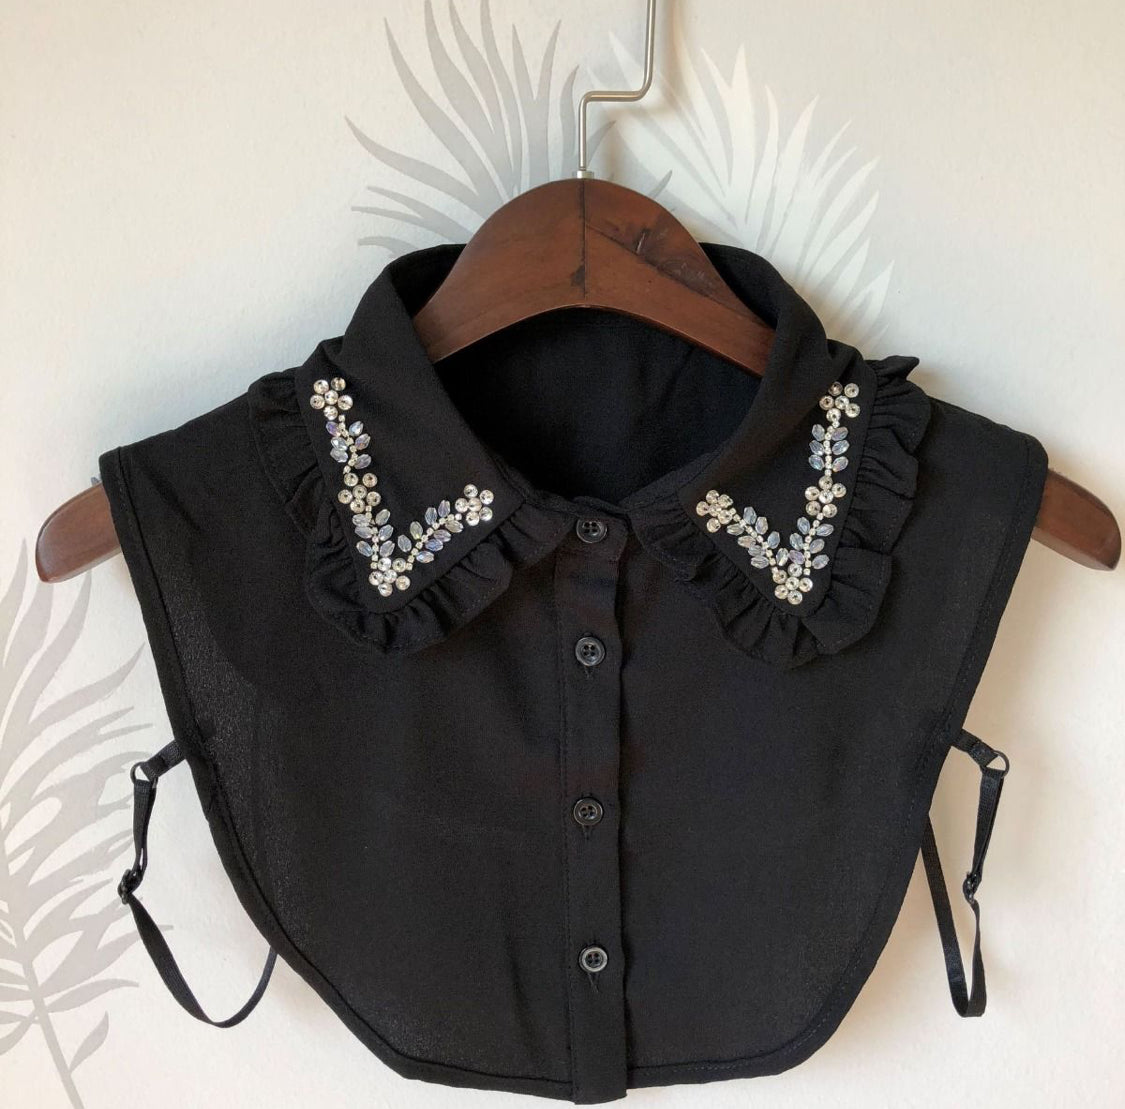 Detachable False Shirt Collars - Black with Daisy Crystals & Beads